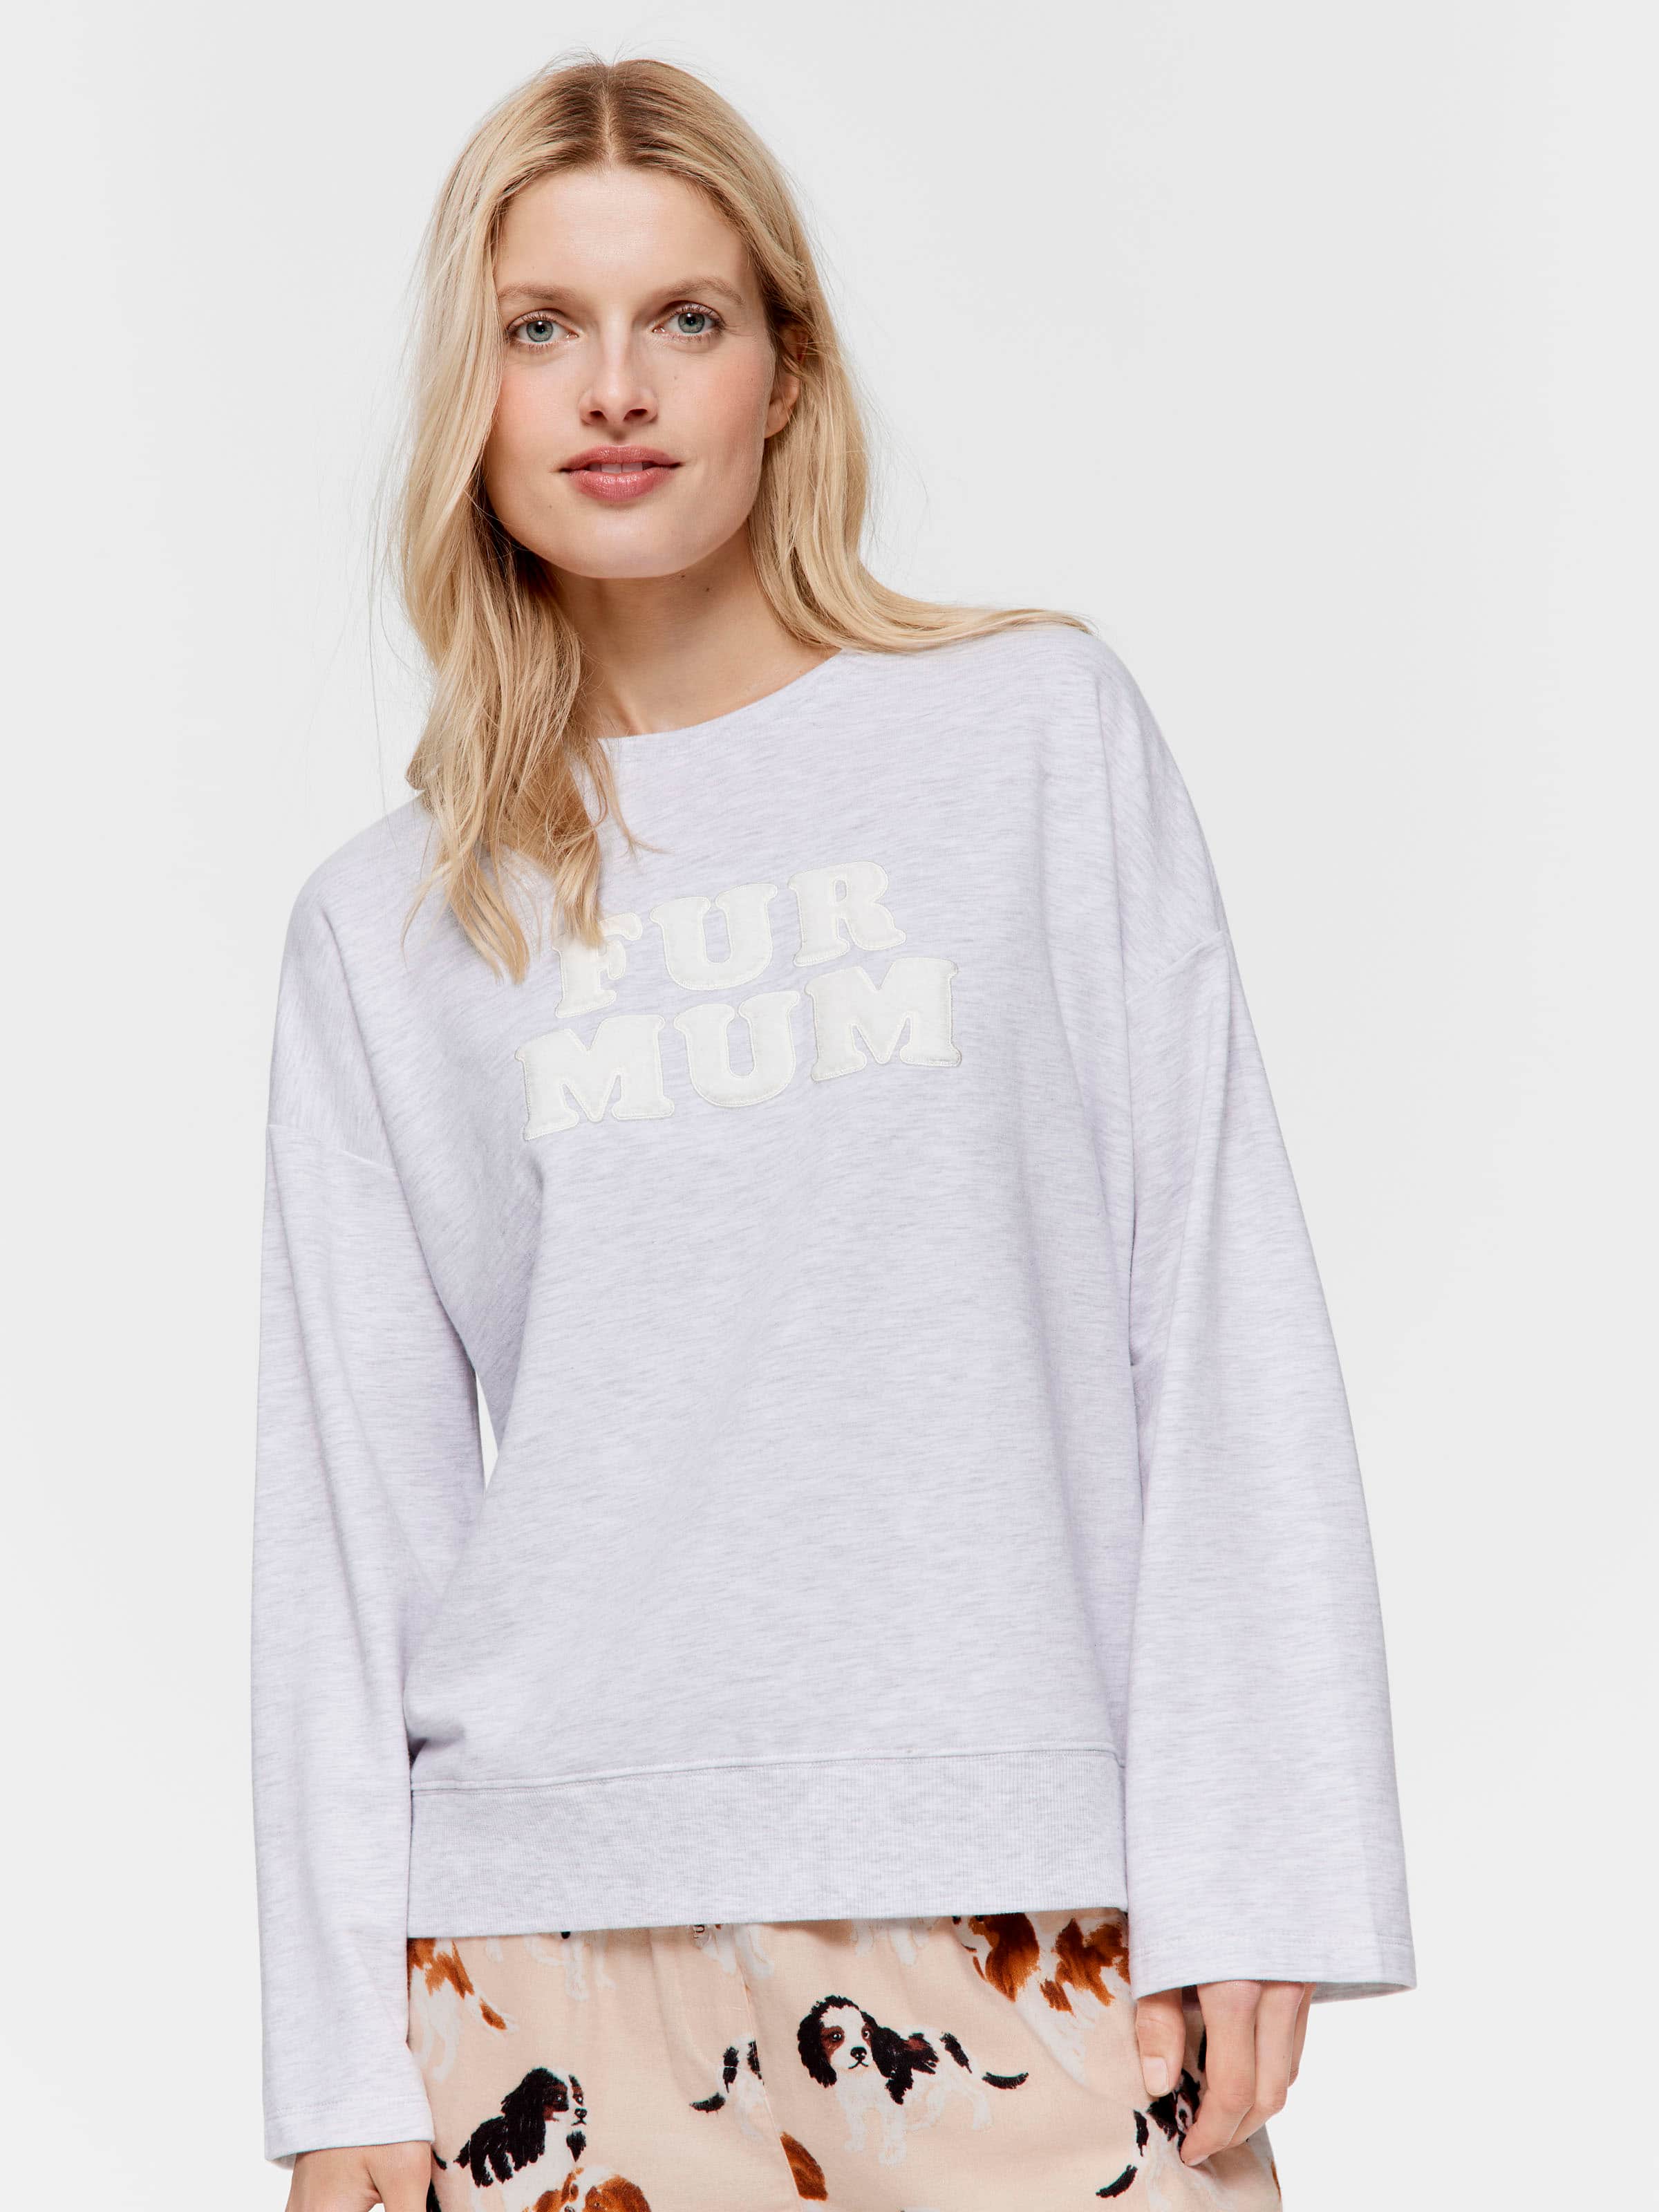 Fur Mum Sweater Top